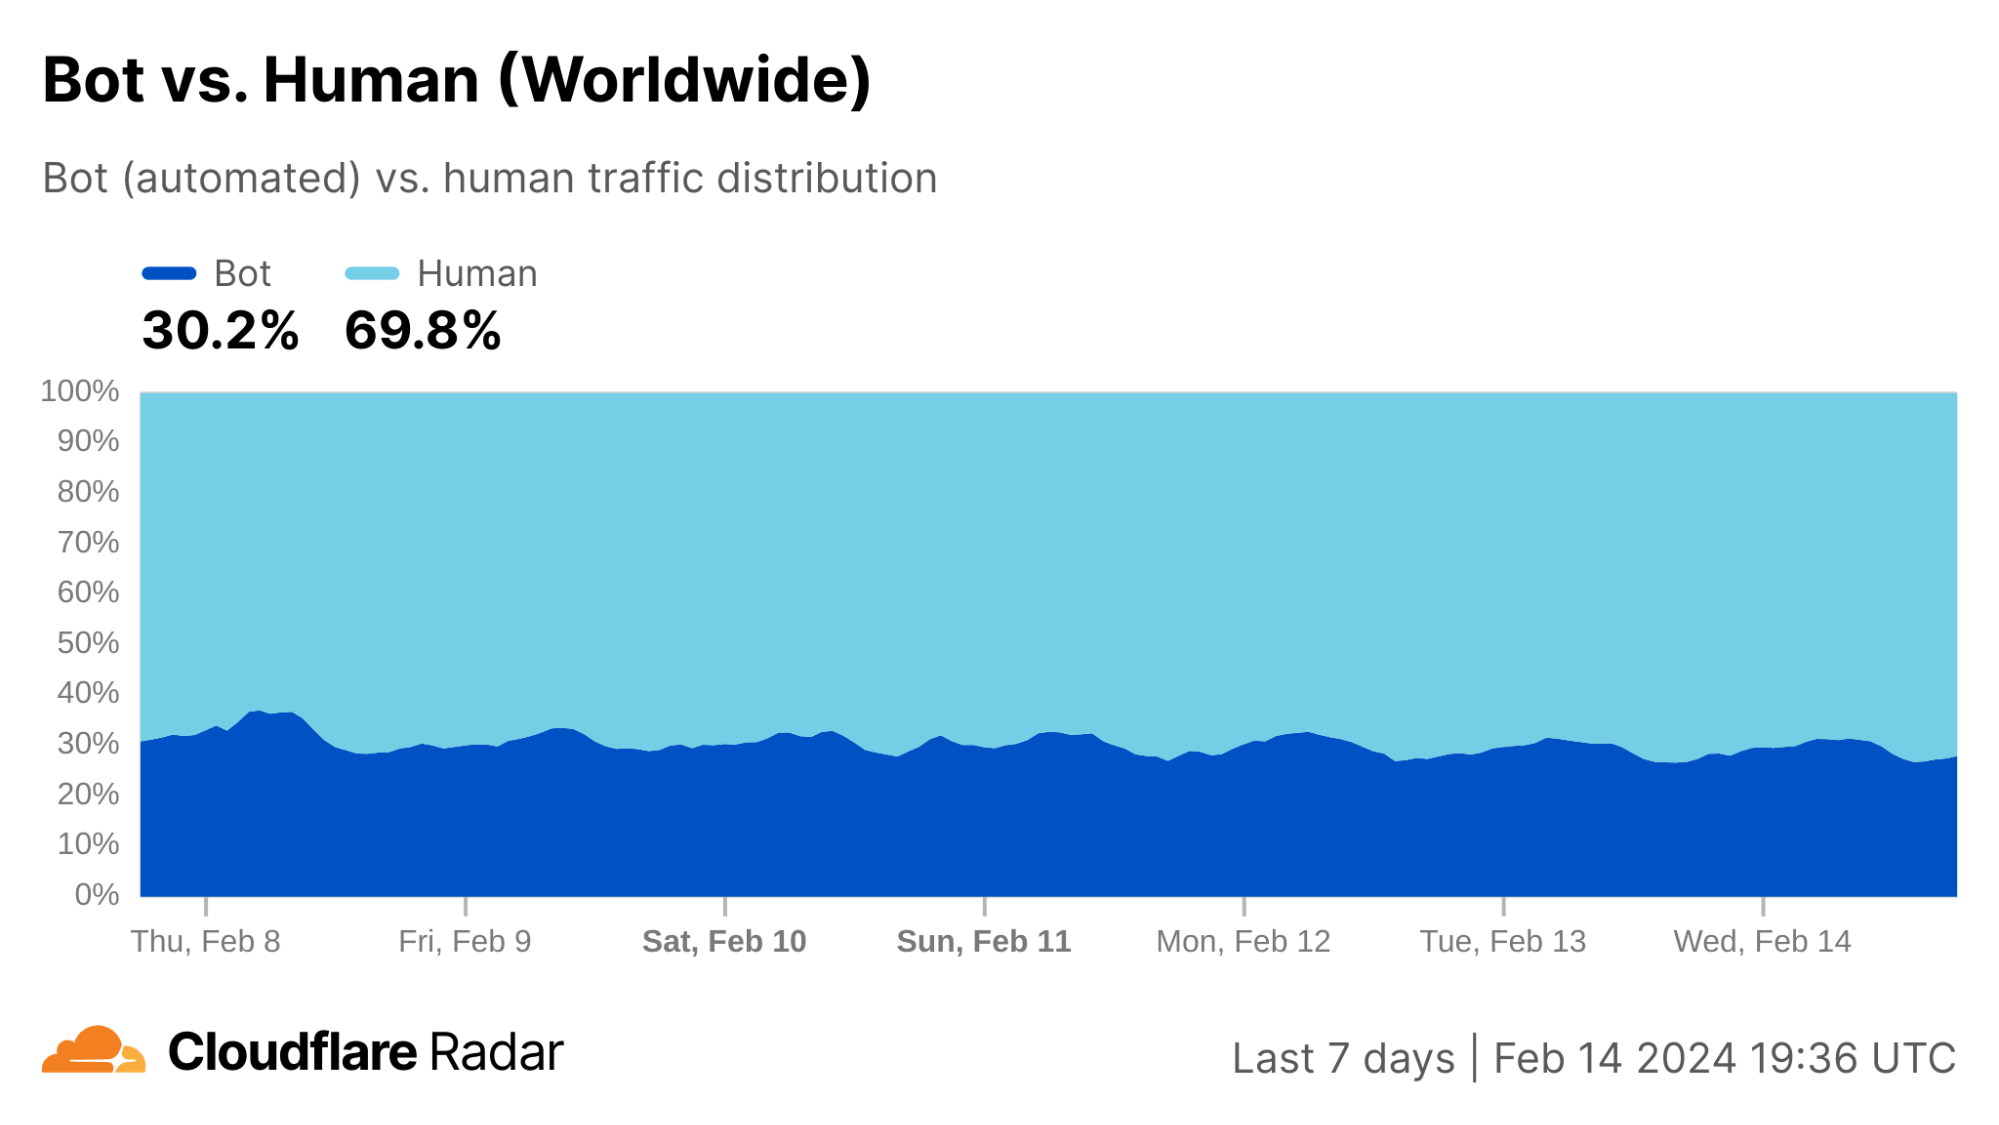 Cloudflare Radar shows that bots make up ~30% of global web traffic.